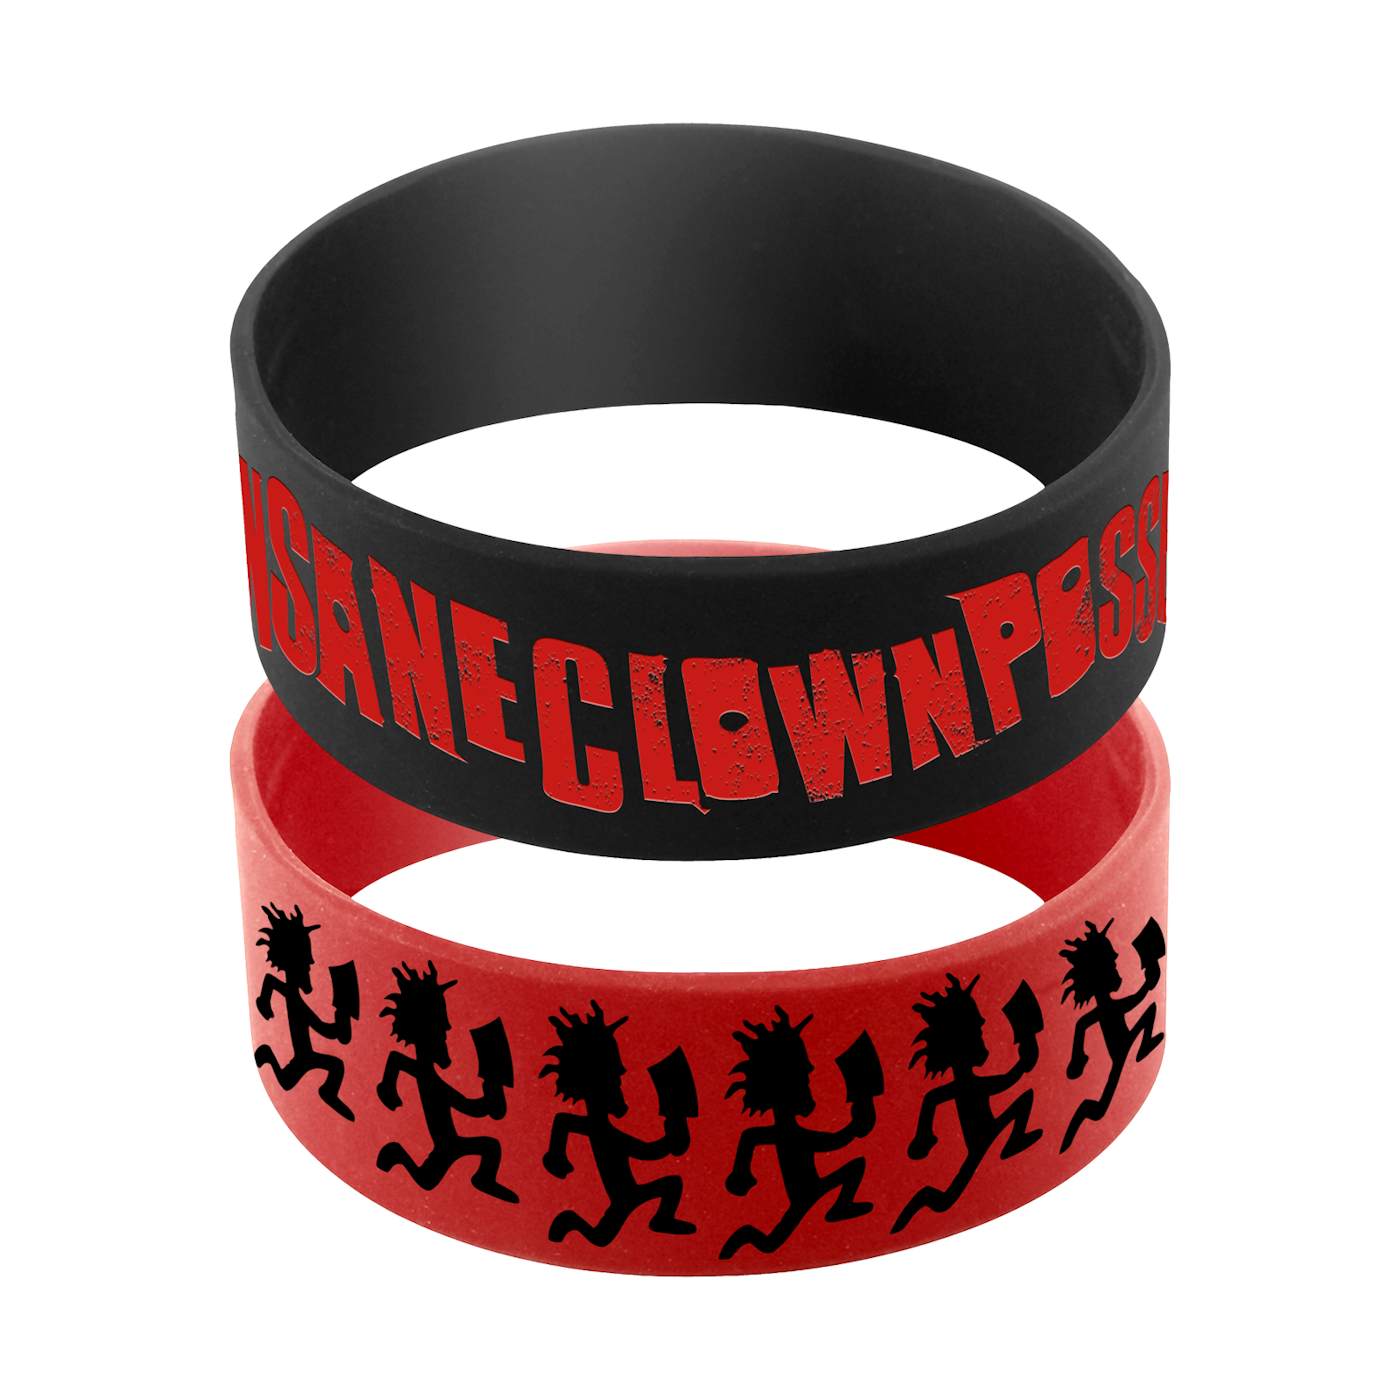 Insane Clown Posse Bracelet 2 Pack | Band Name And Hatchetman Logo Insane Clown Posse Bracelets